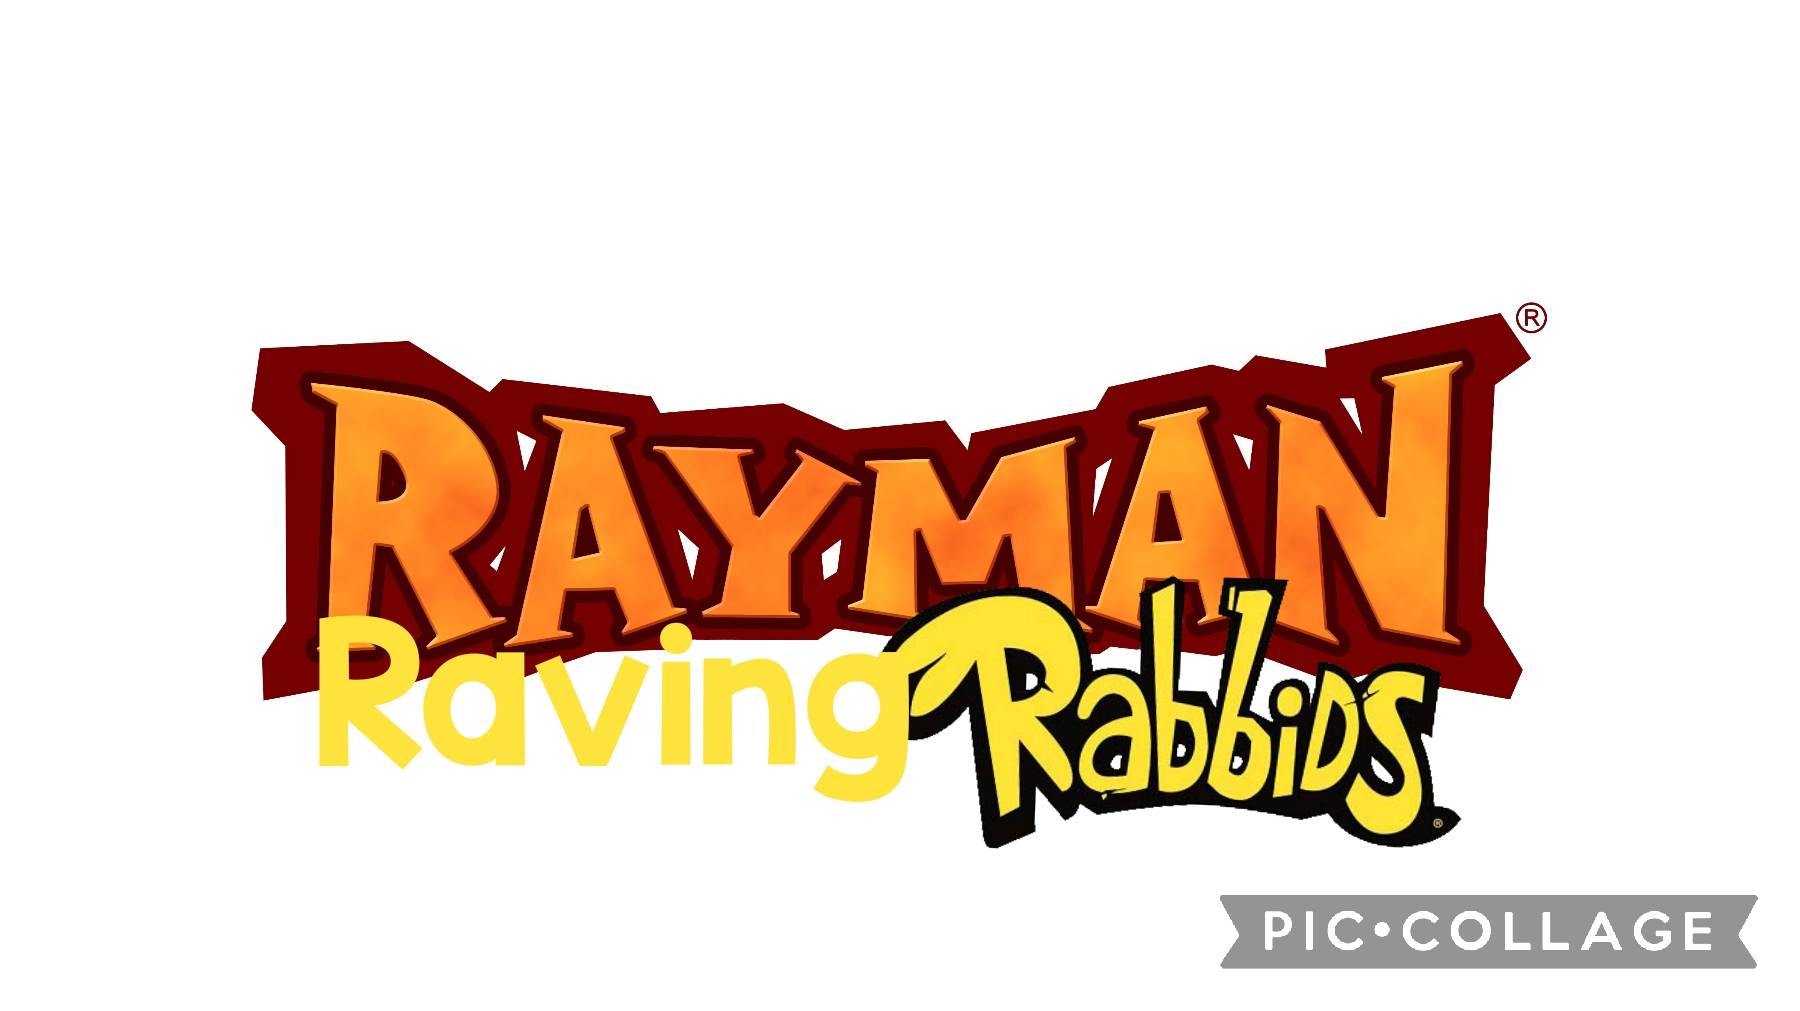 Rayman: The Animated Series (TV Series 1999–2000) - IMDb